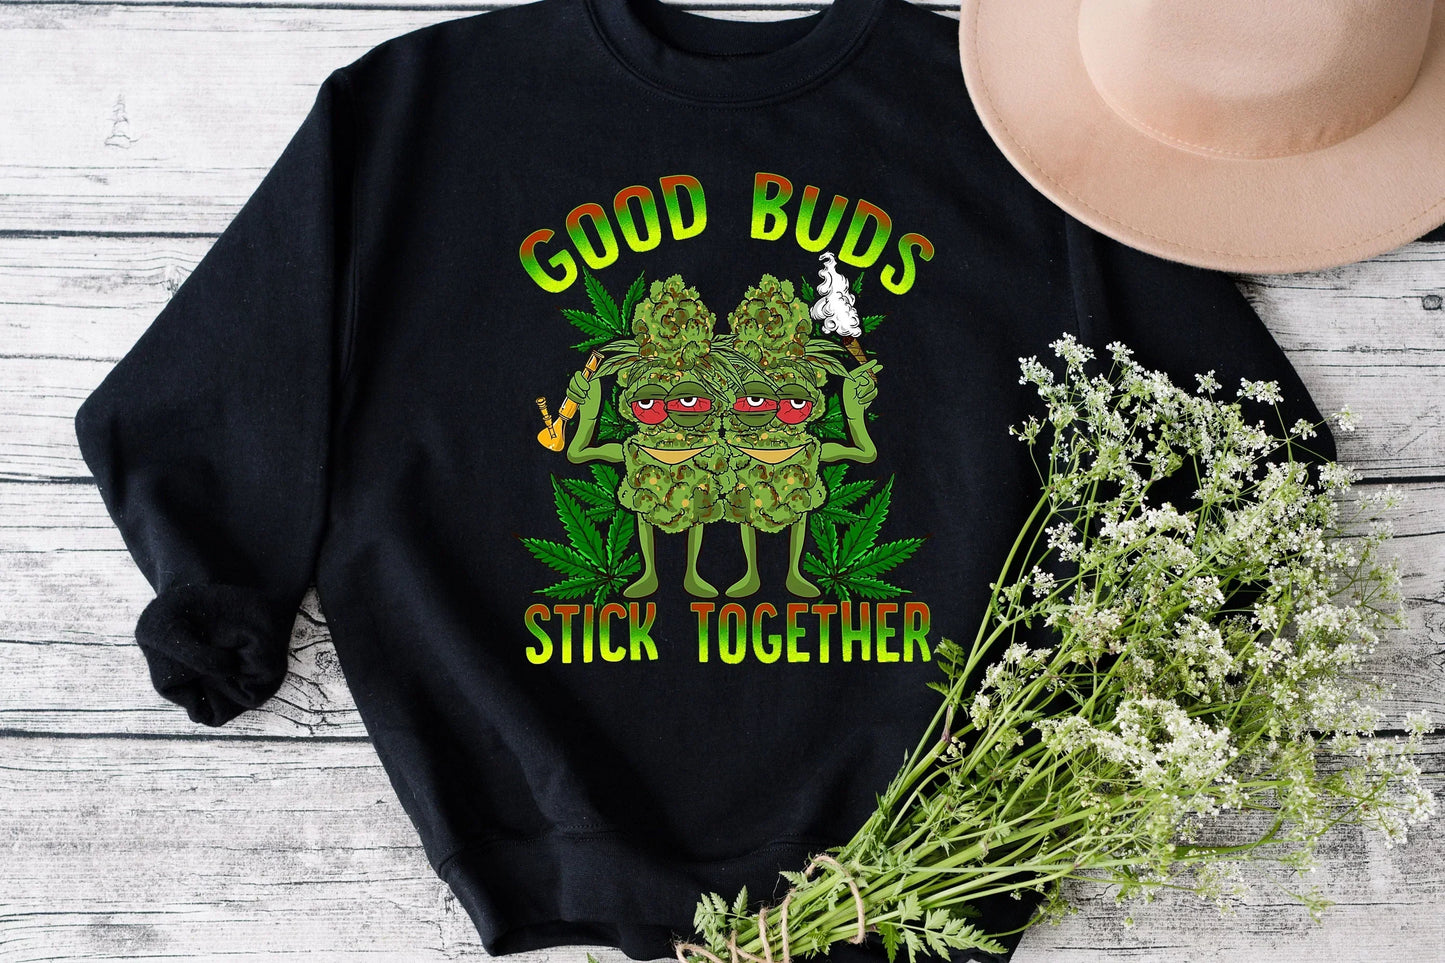 Good Buds Stick Together, Stoner Friends Shirt HMDesignStudioUS